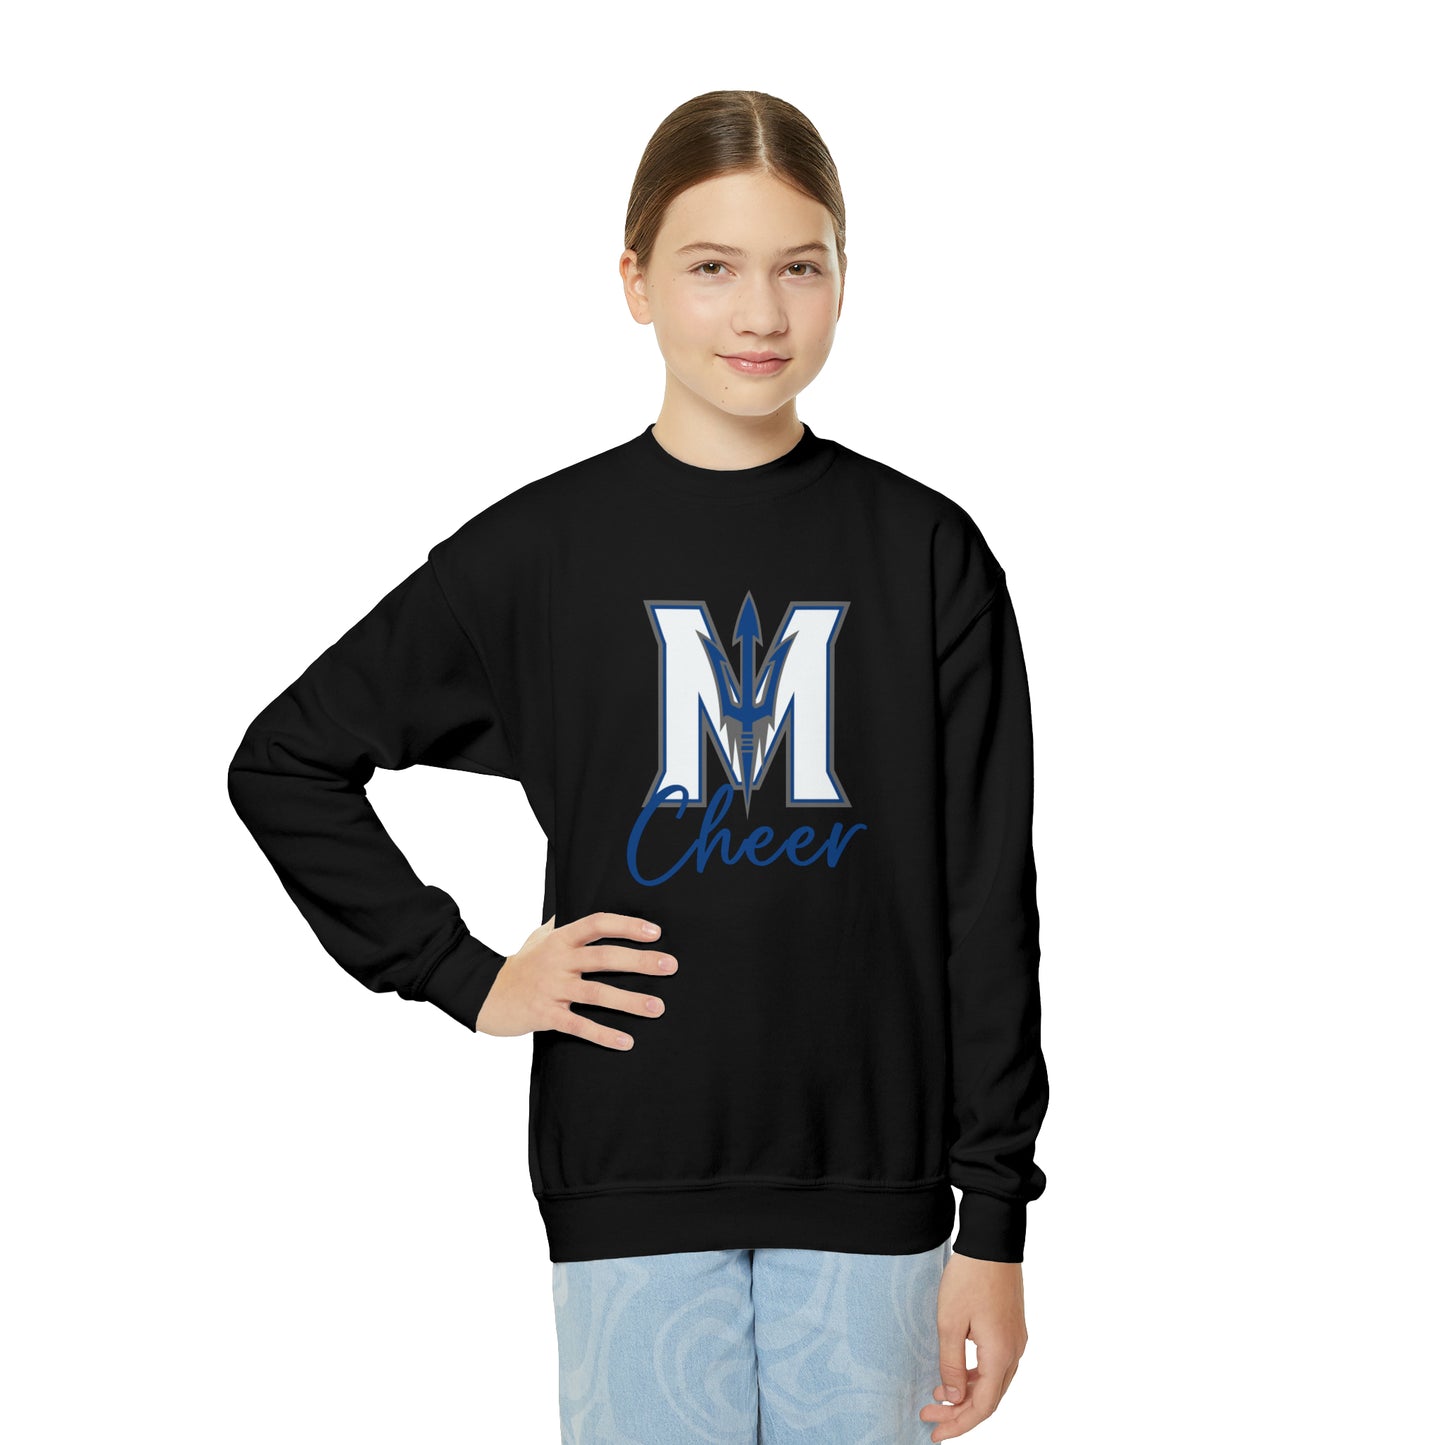 Morris Cheer Youth Crewneck Sweatshirt